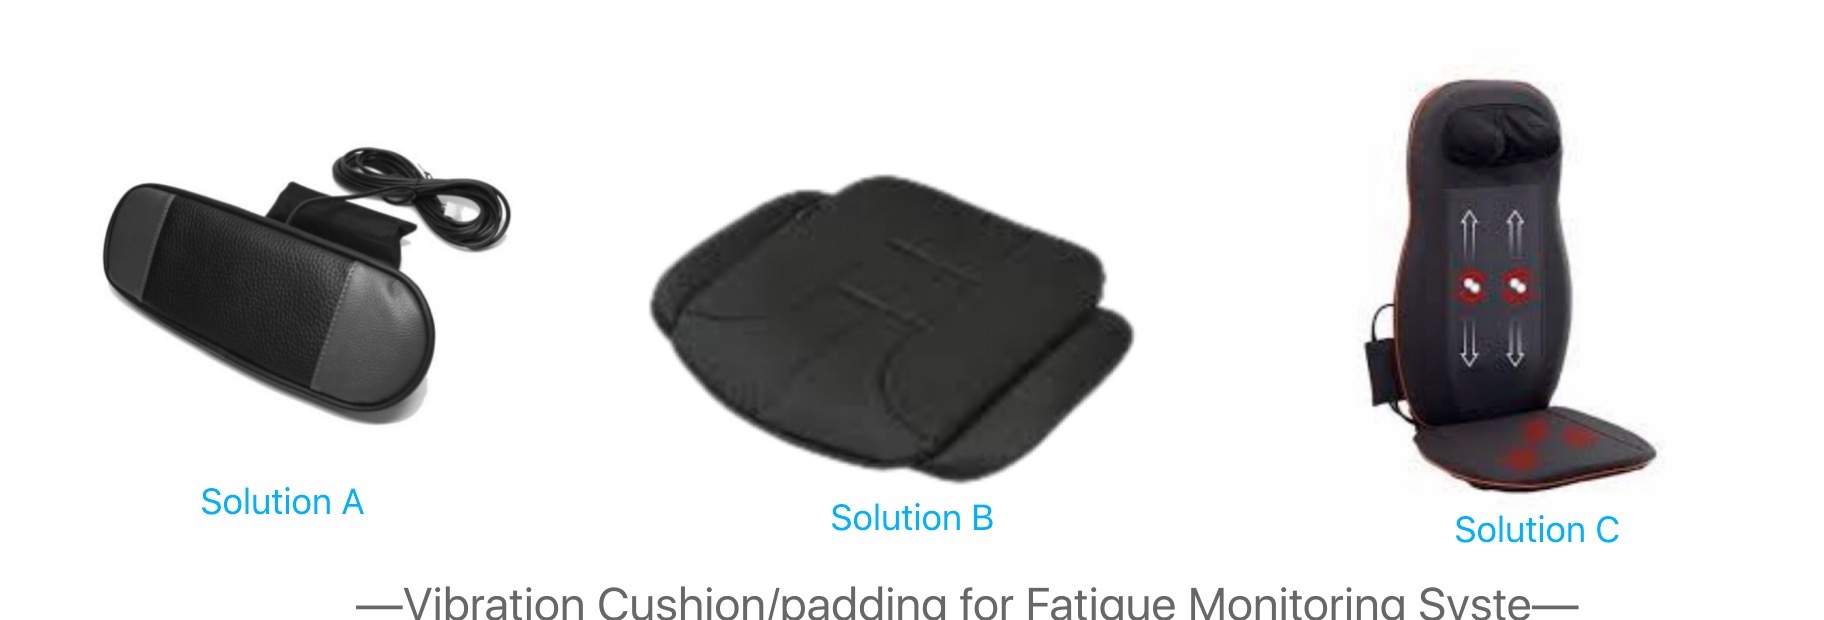 Vibration Cushion/padding for Fatigue Monitoring System